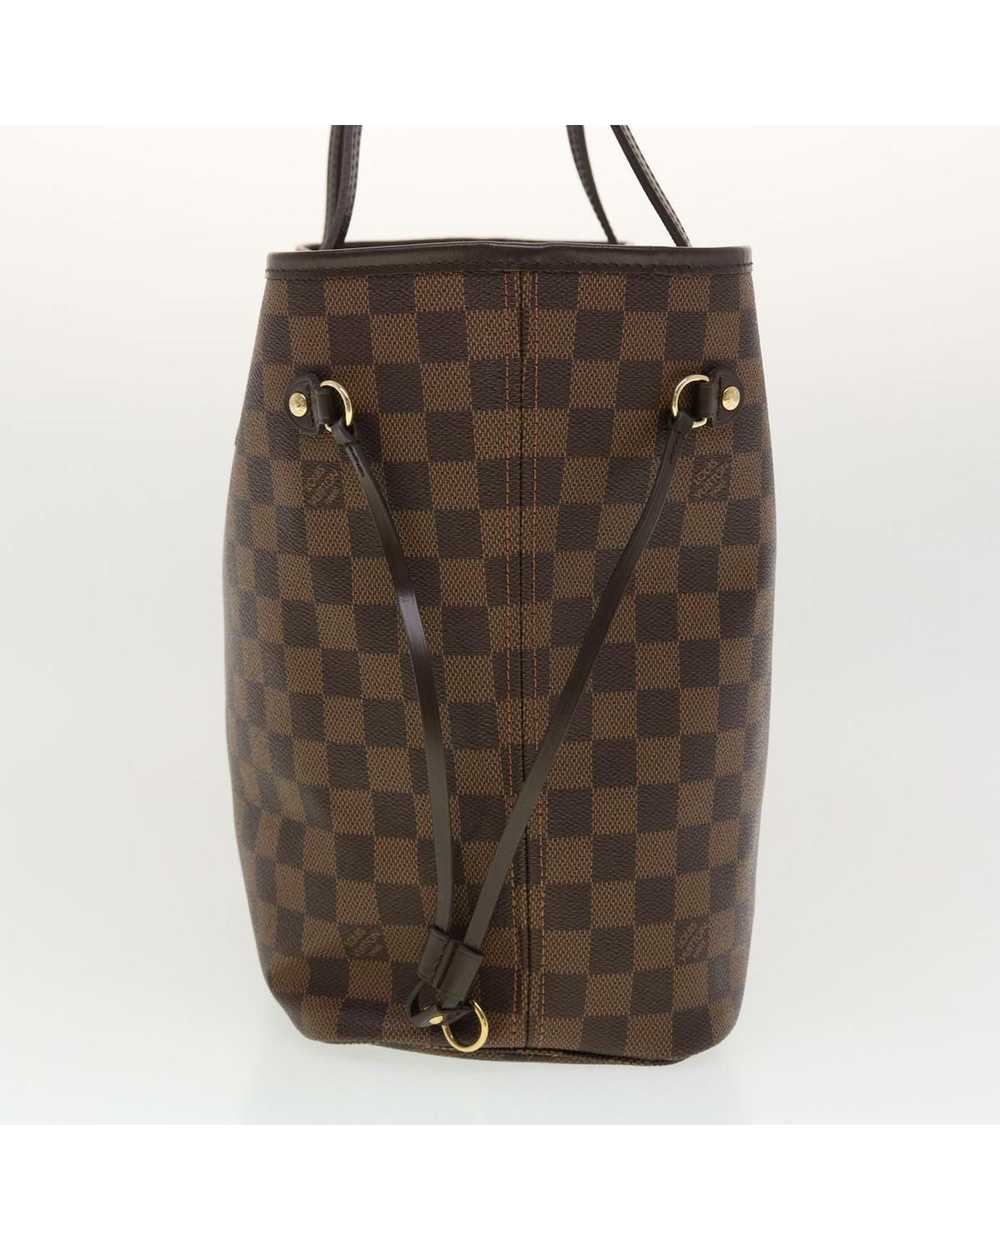 Louis Vuitton Classic Damier Ebene Tote Bag - image 3